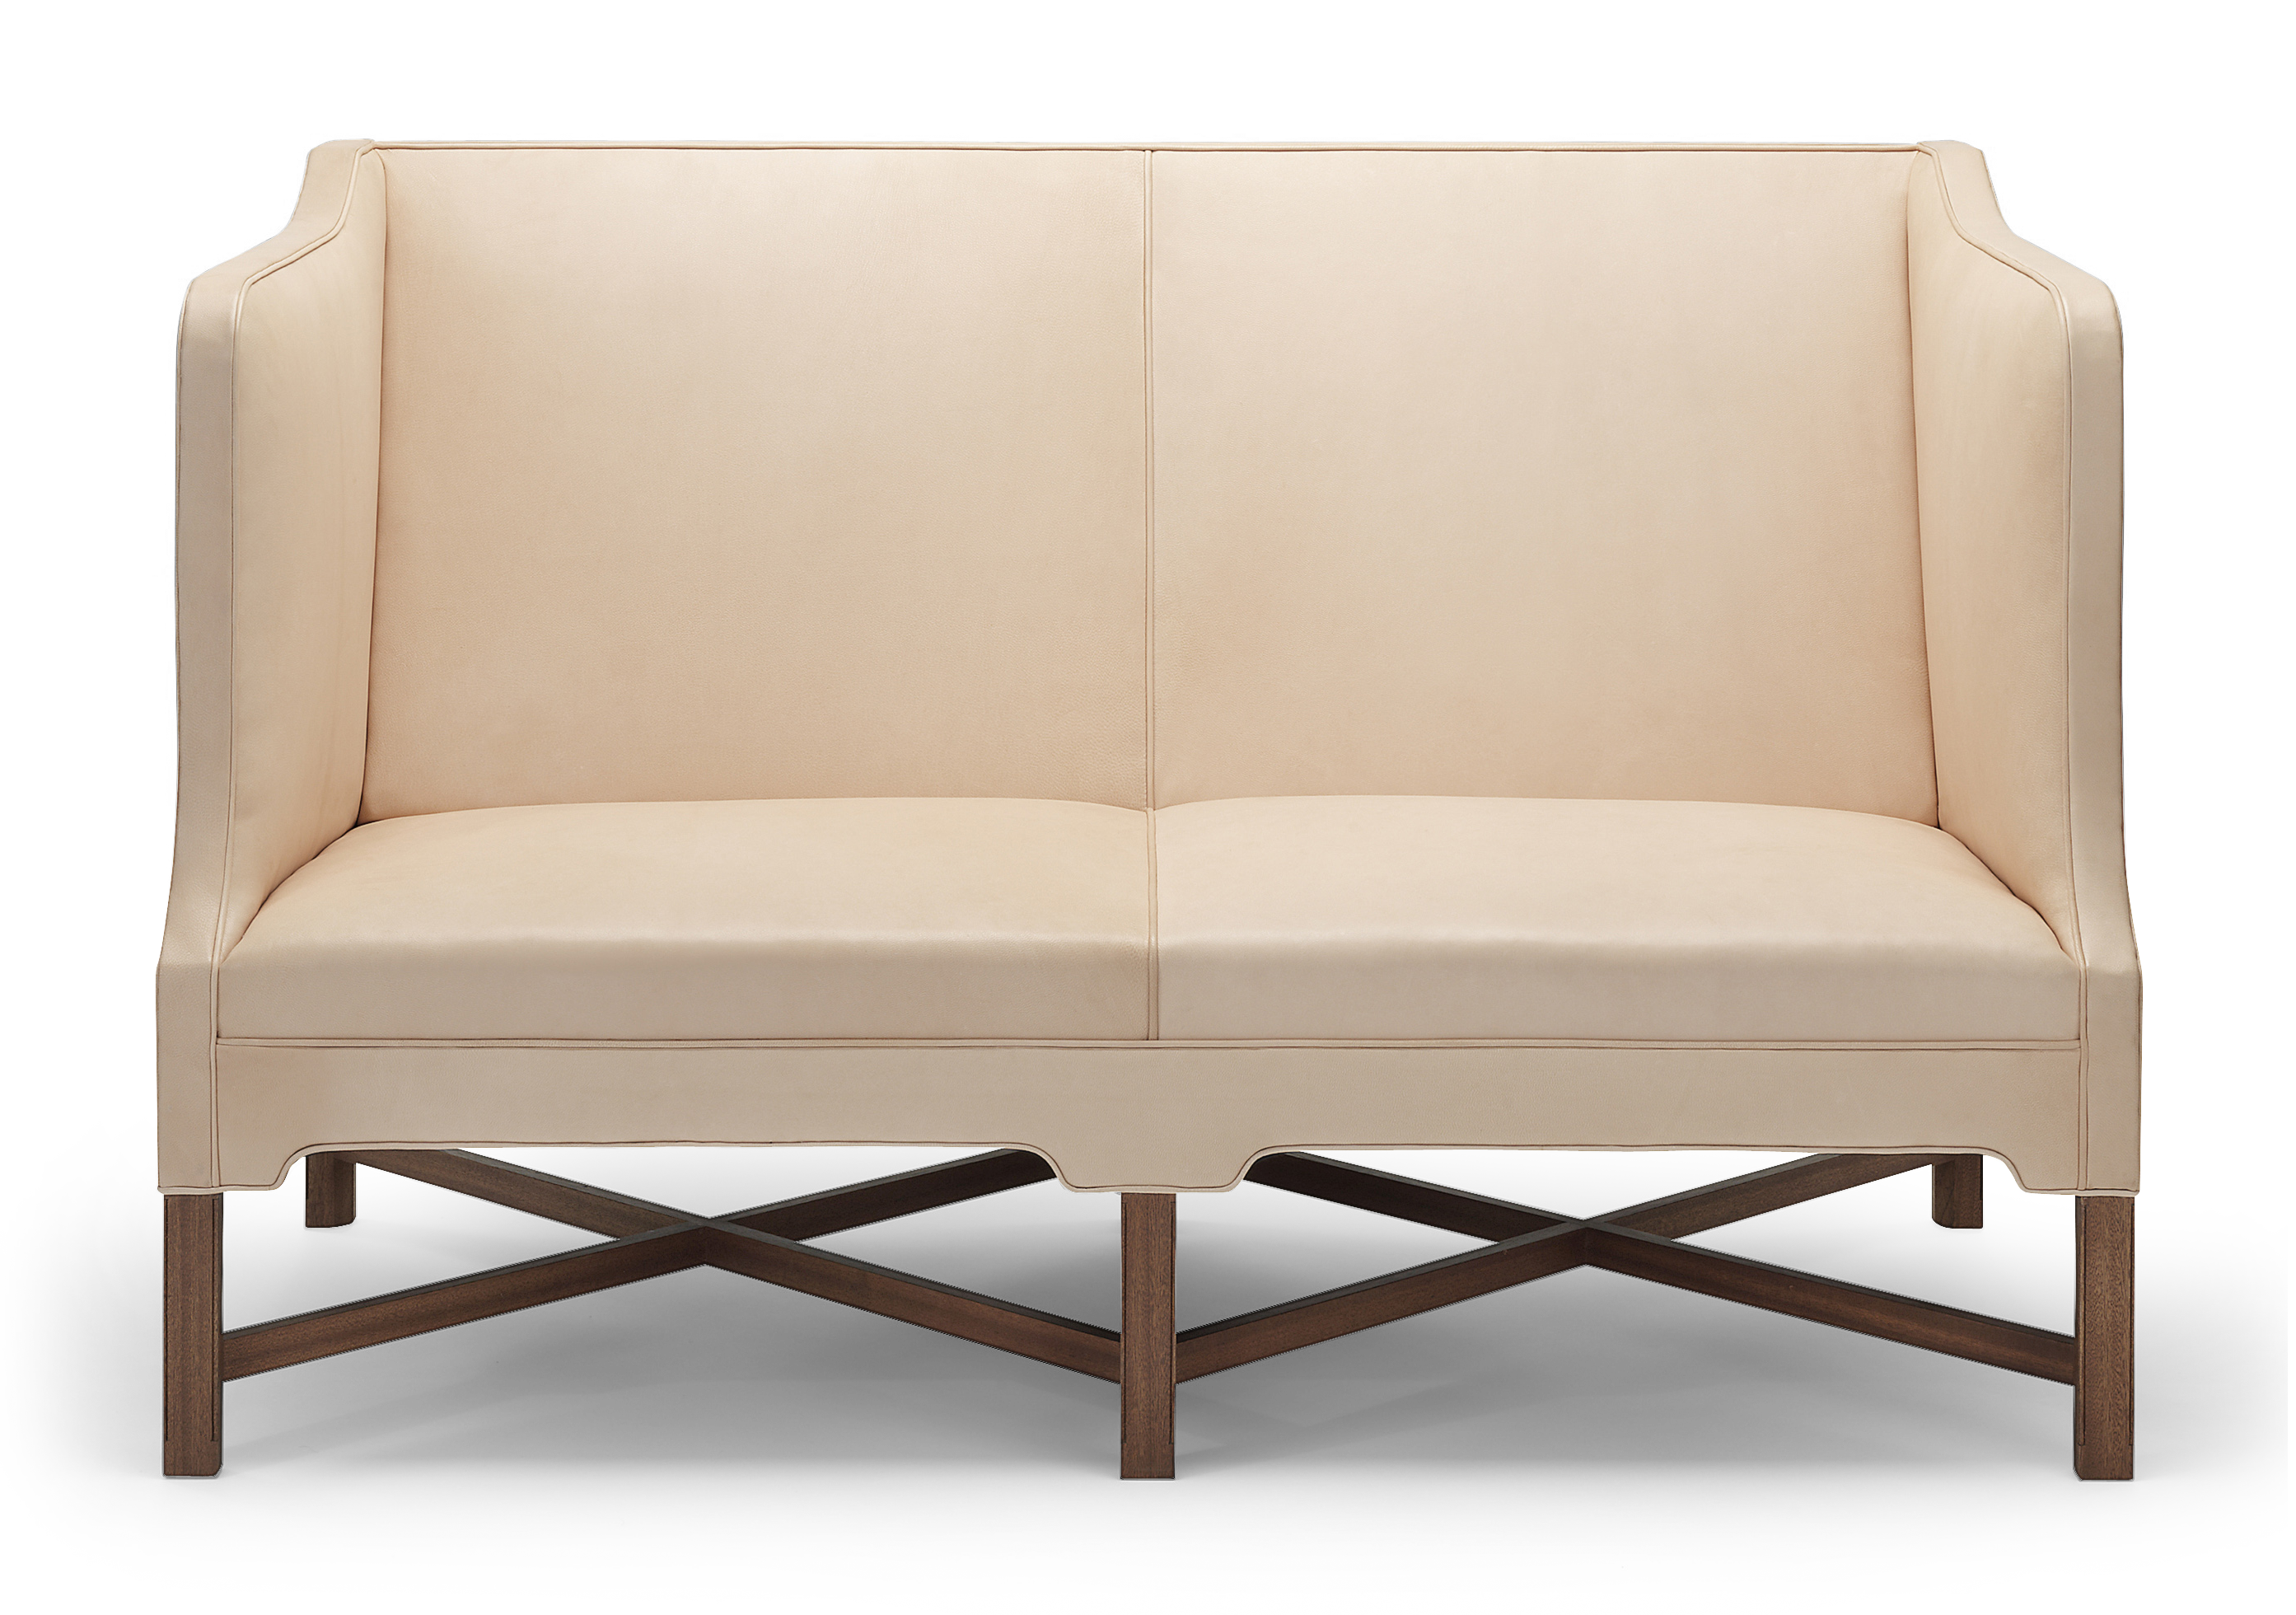 KK41180 | Sofa with high Sides